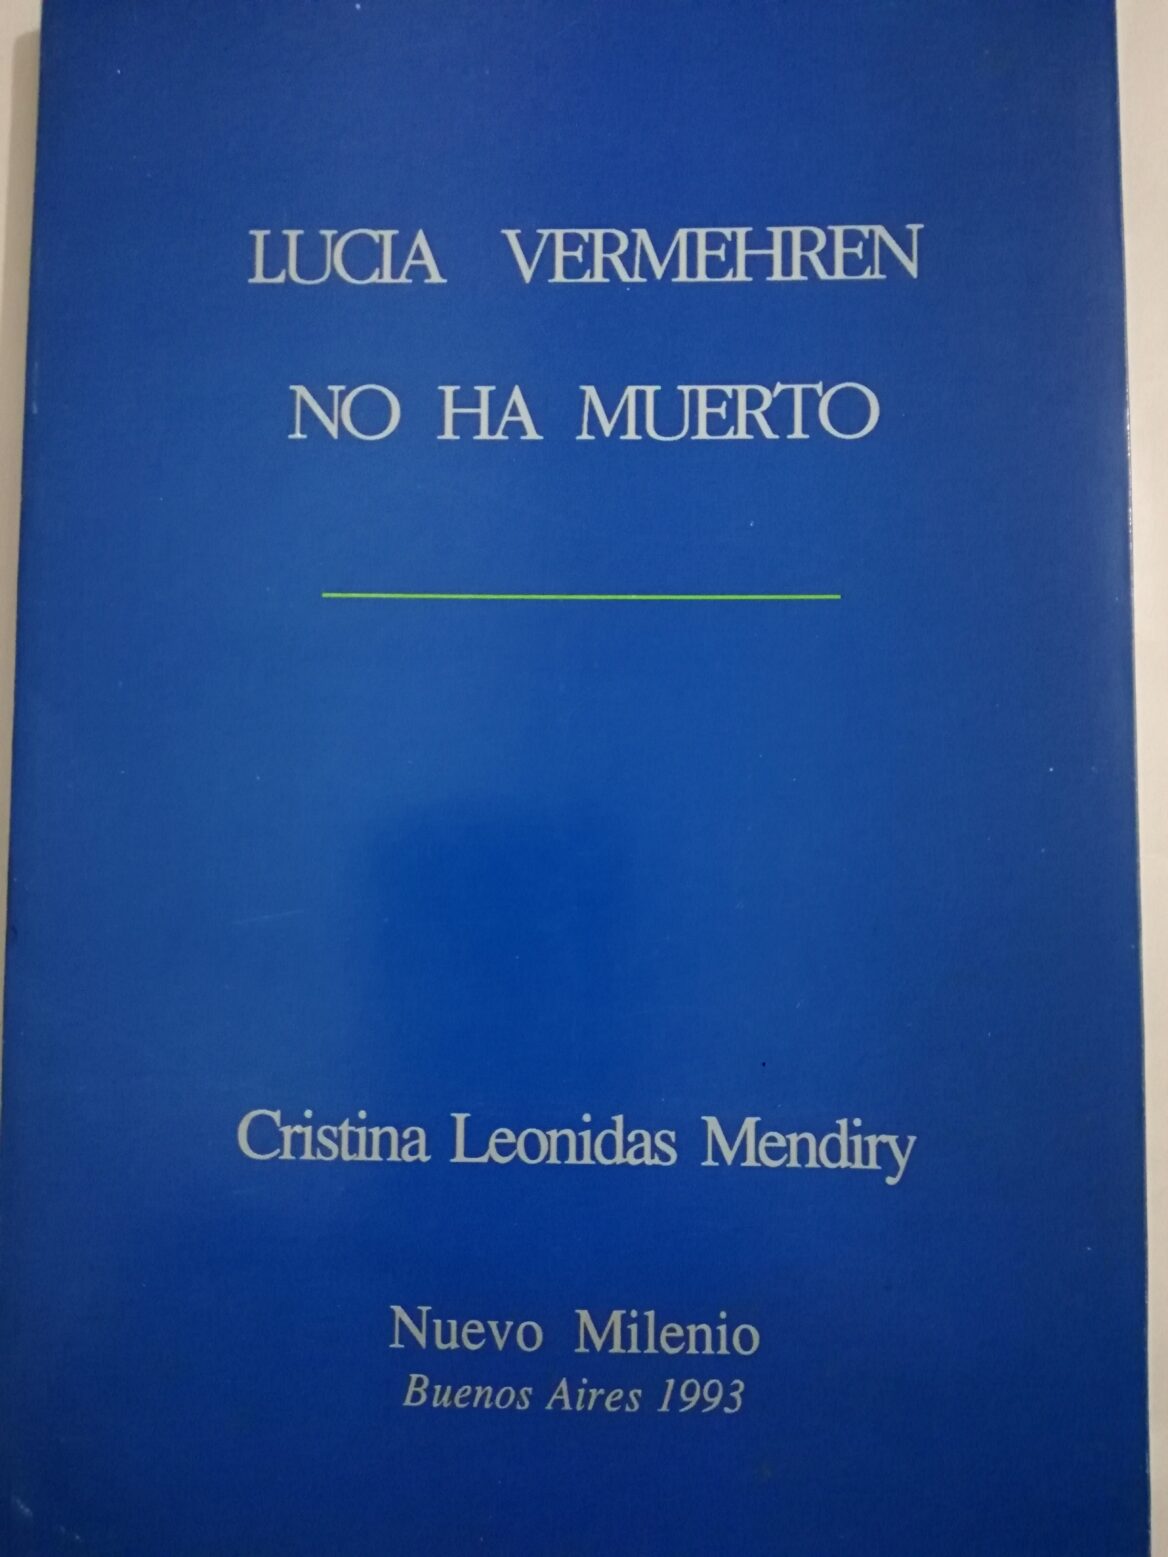 Libro Mendiry 3 – Lucia Vermehren no ha muerto